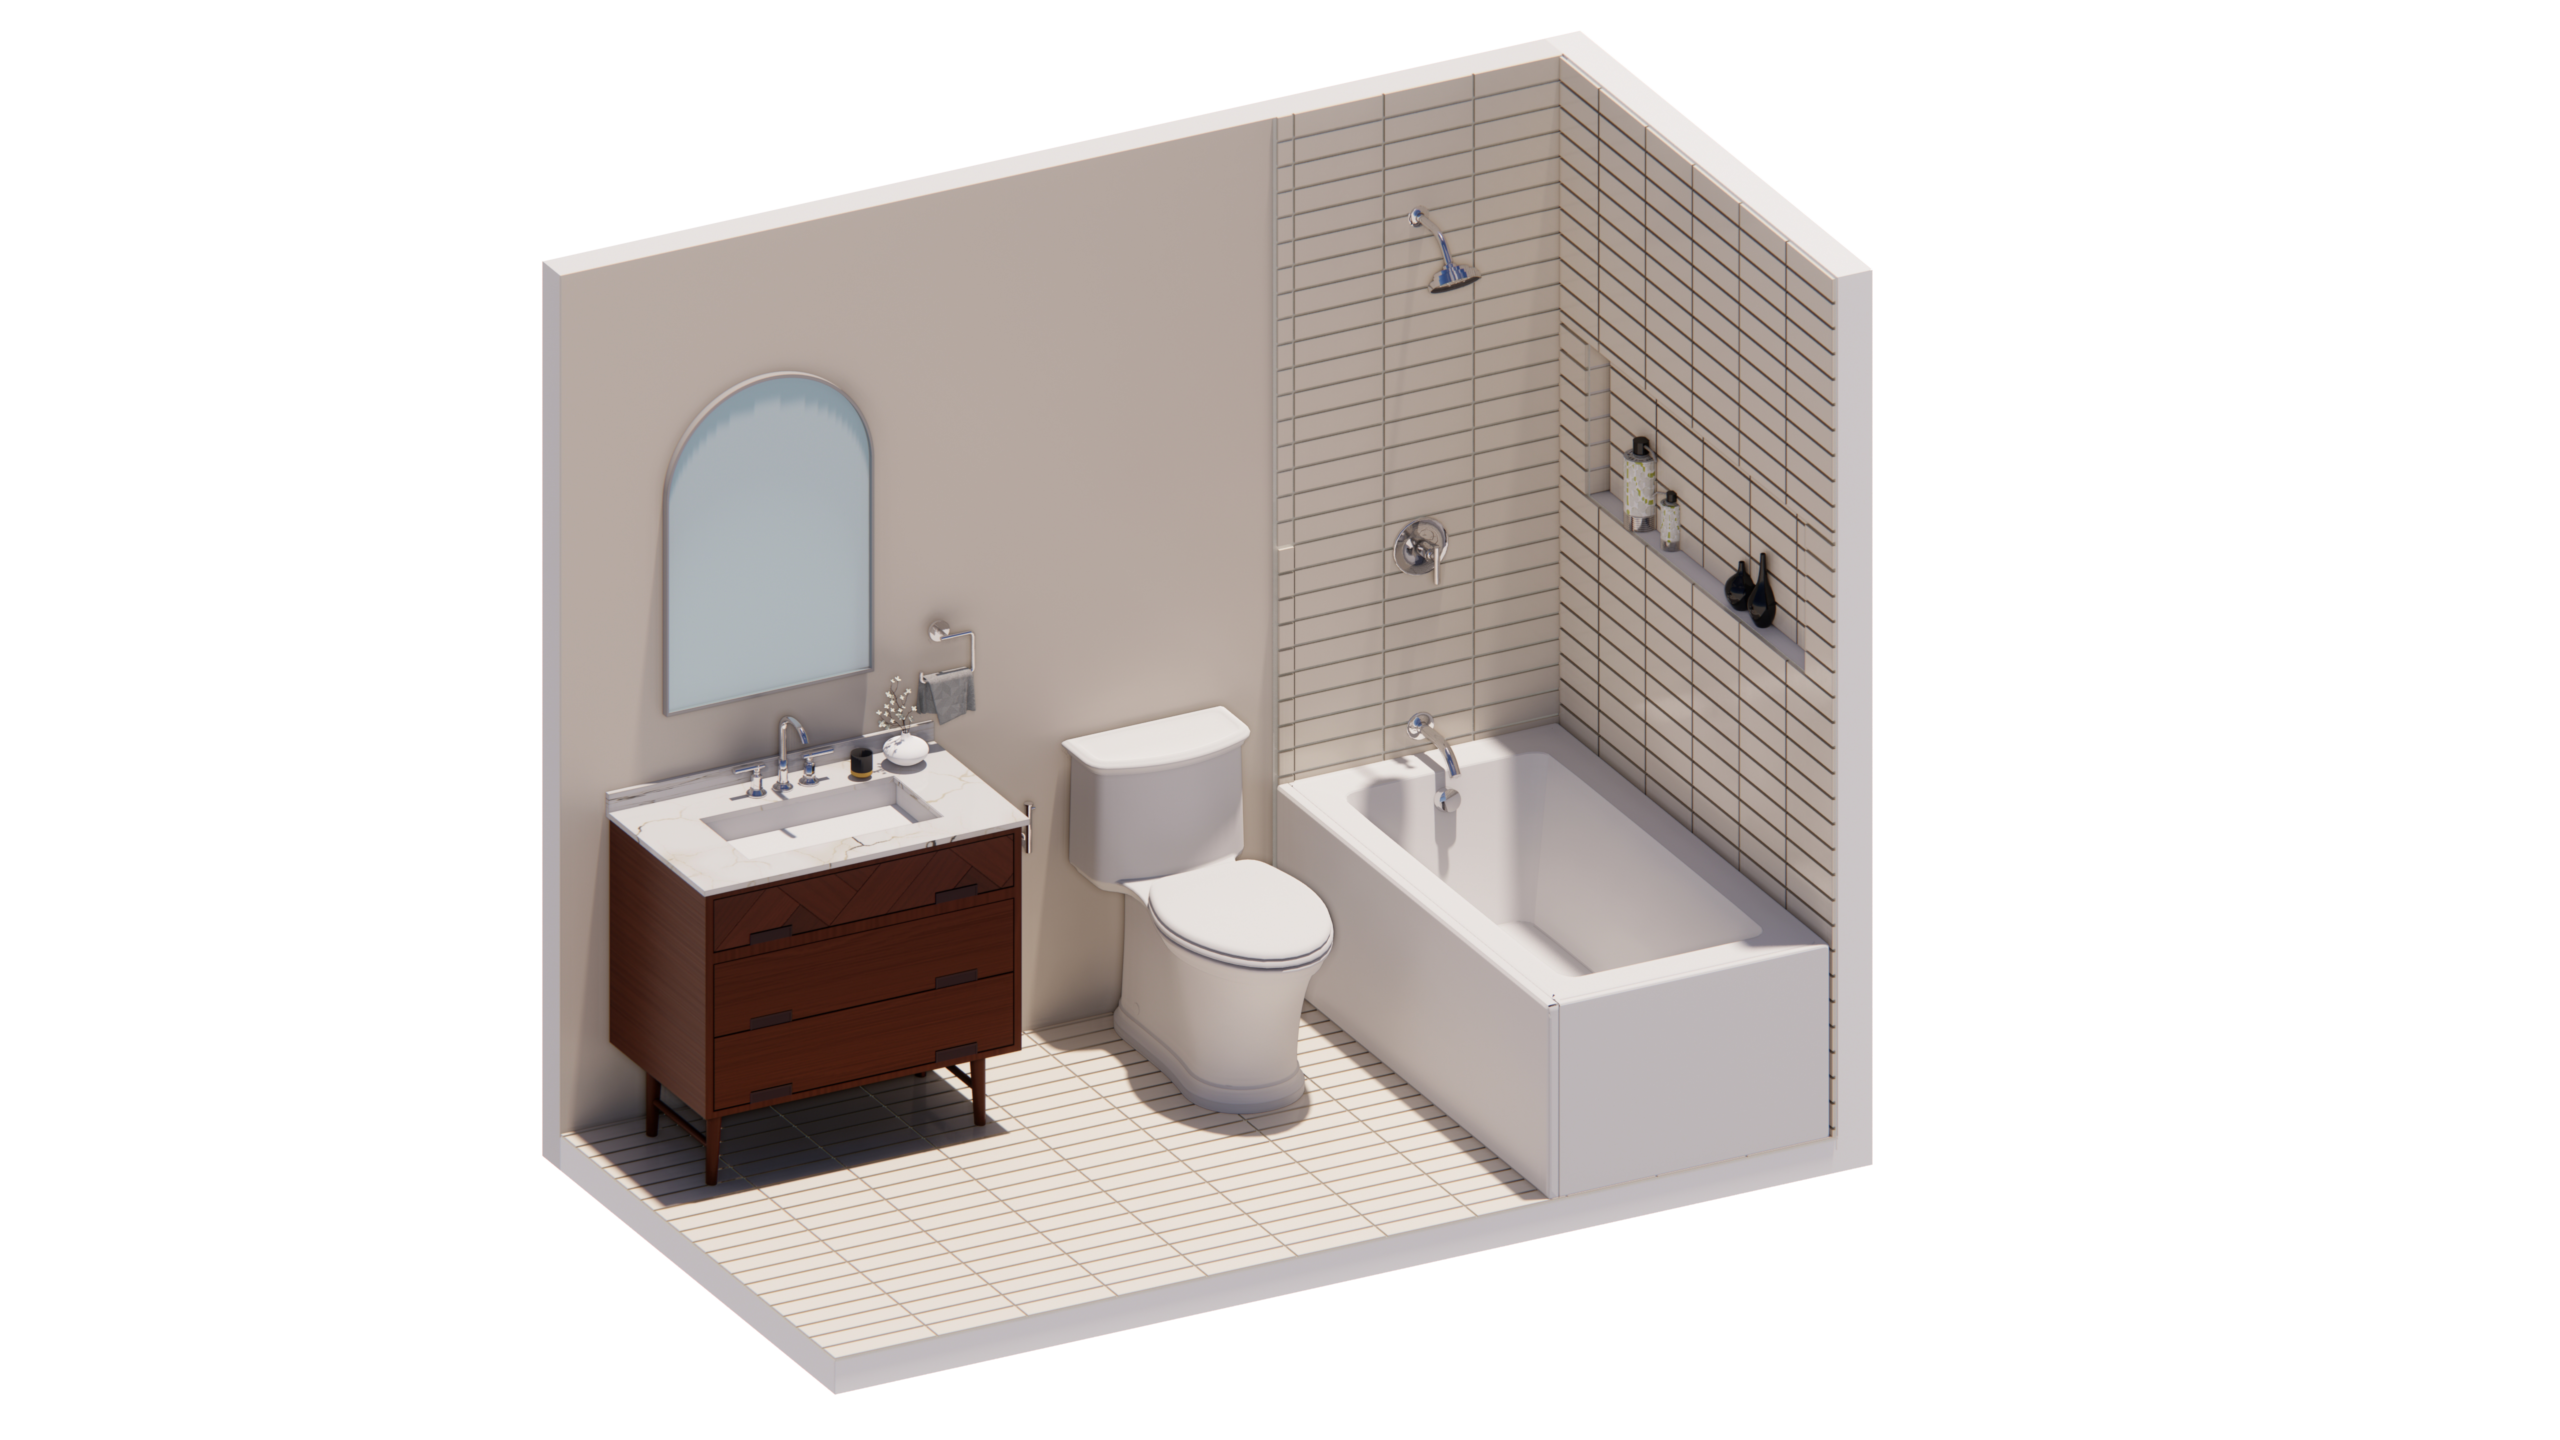 Sahara - NOMI Guest bathroom remodel collection